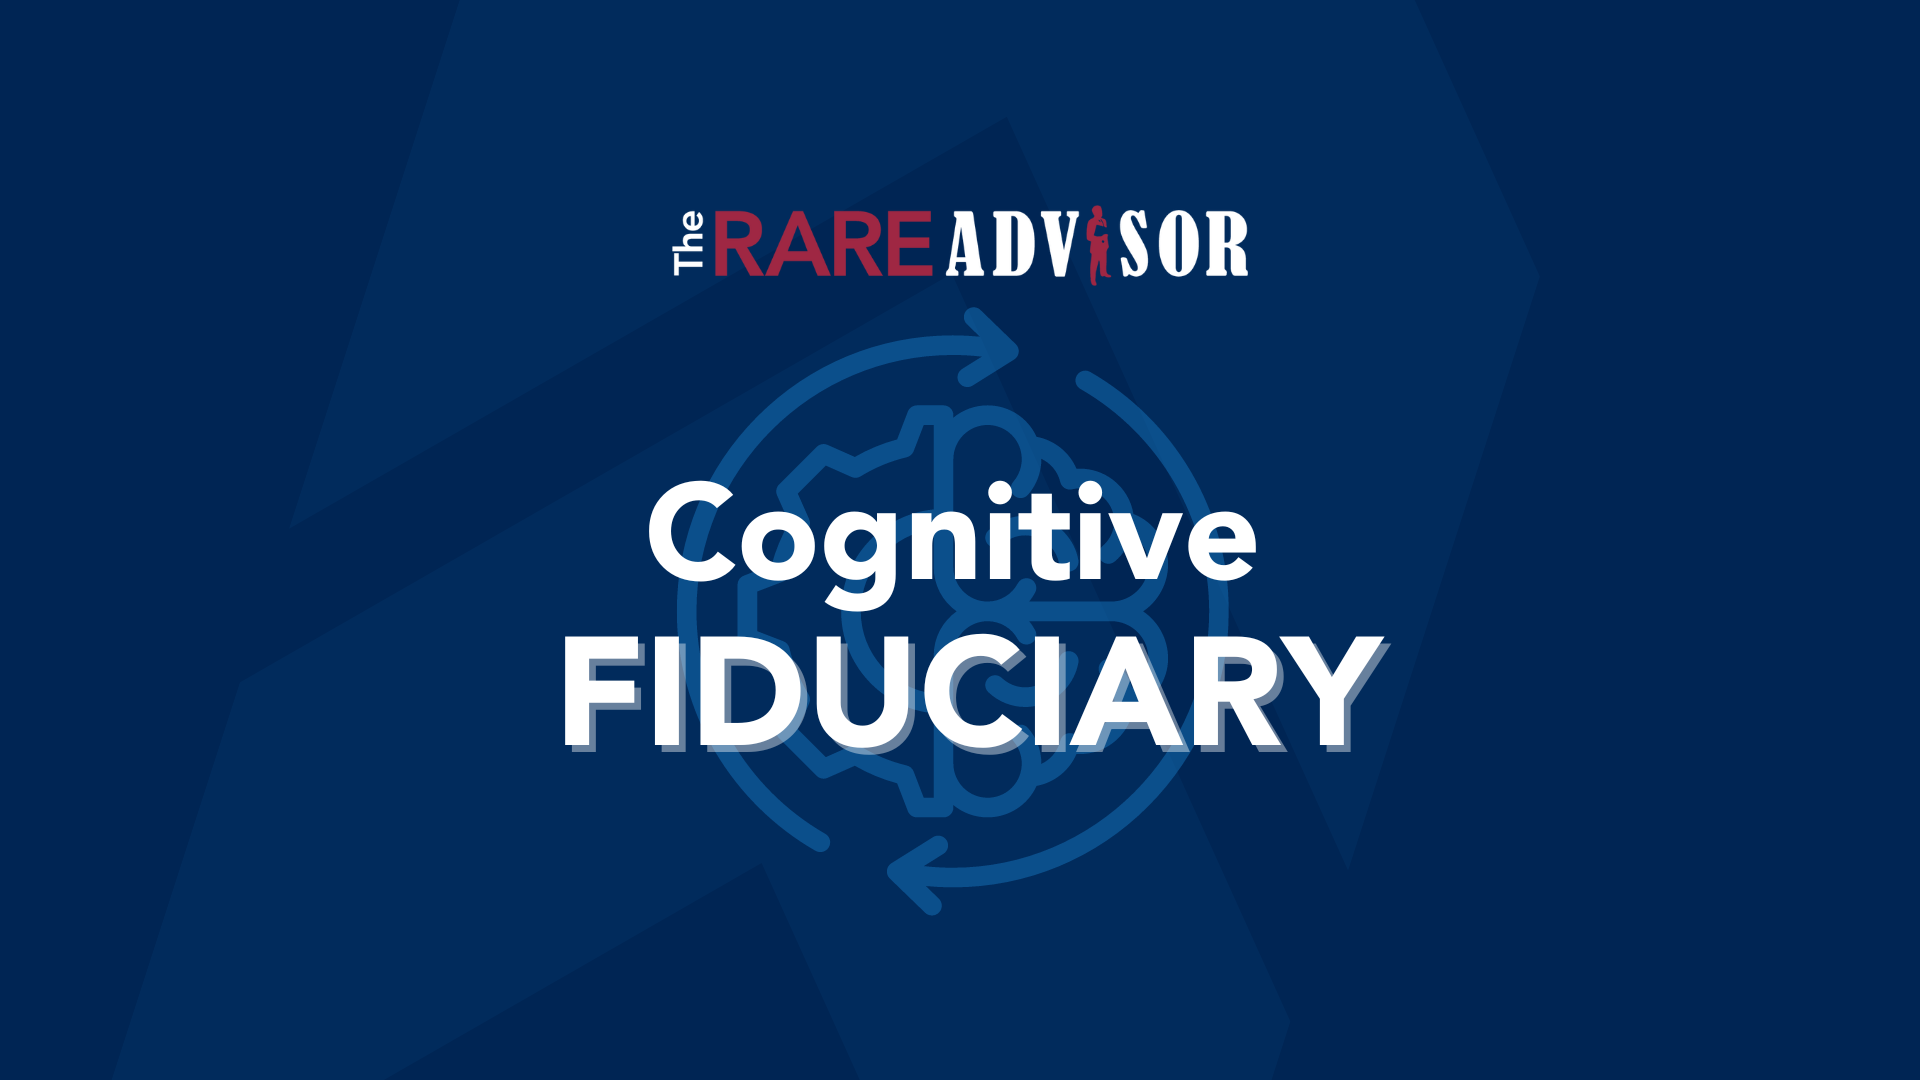 The RARE Advisor: You are a Cognitive Fiduciary